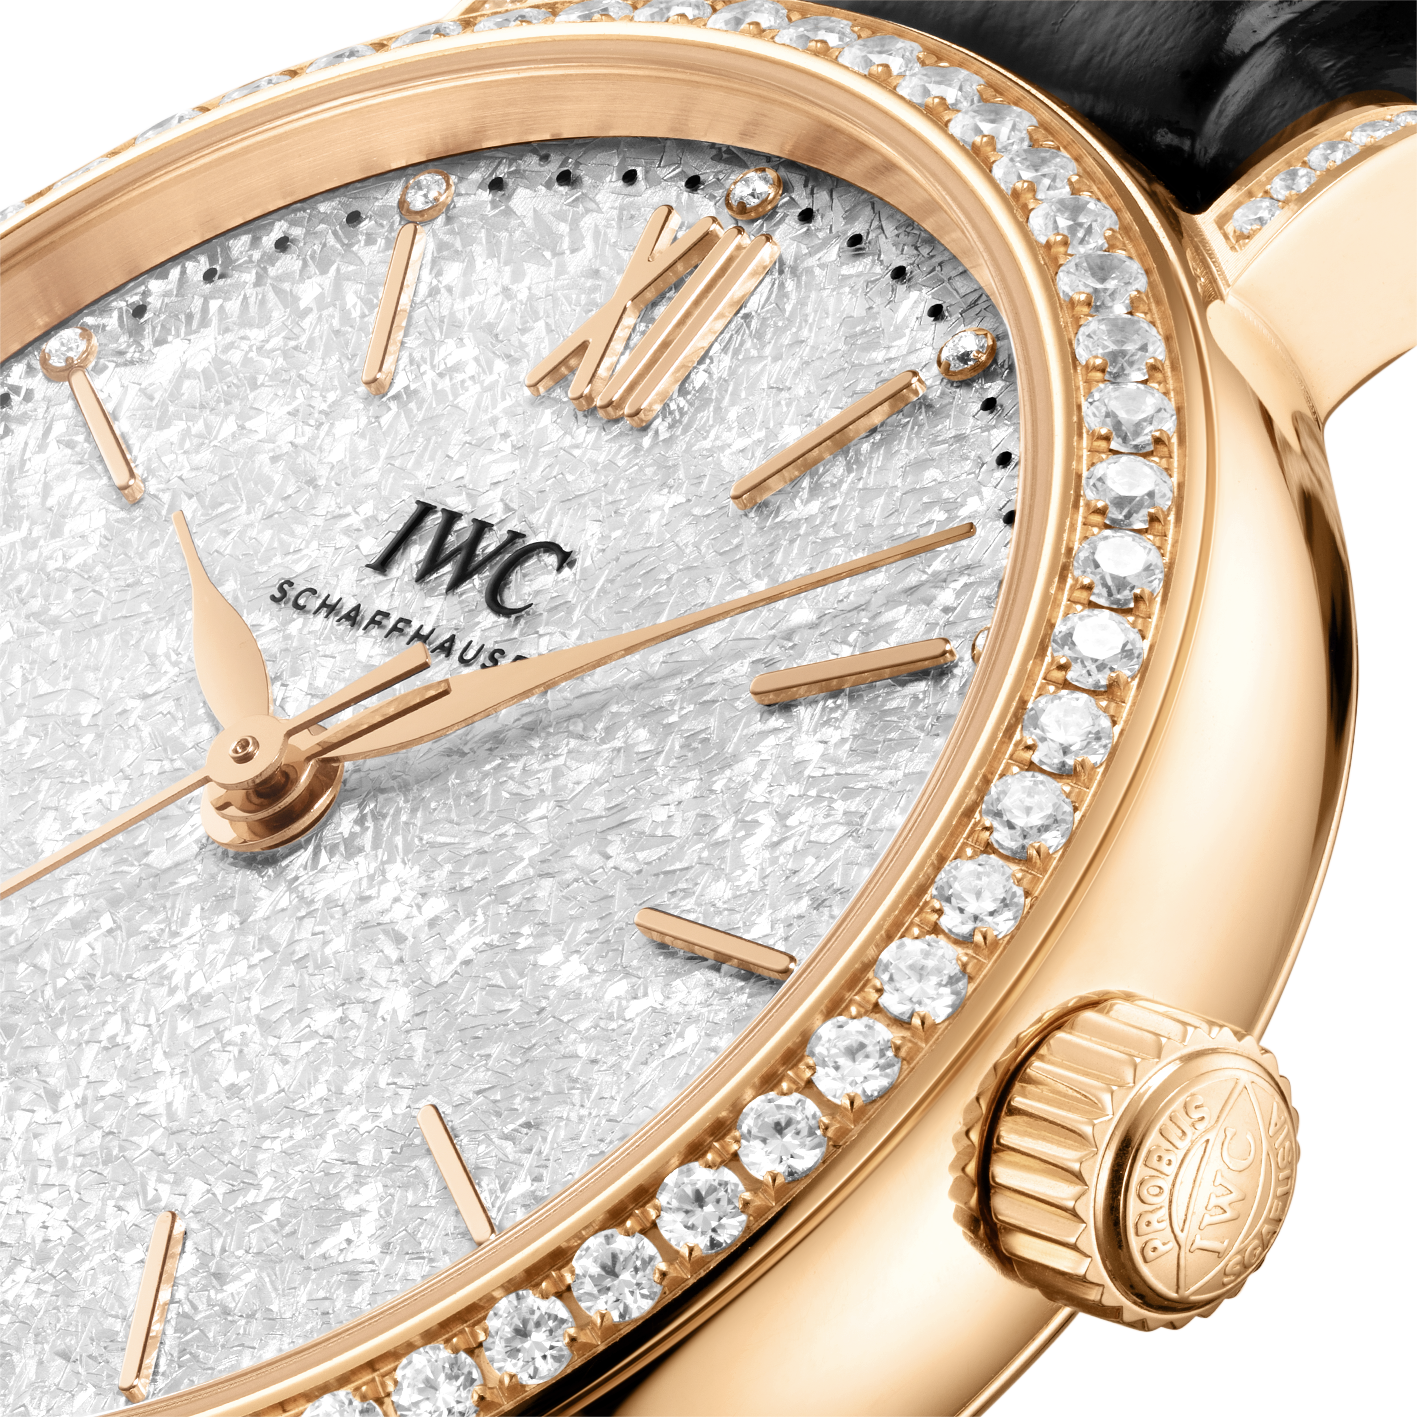 IWC Portofino Automatic Diamonds Silver Dial Black Leather Strap Watch for Women - IW357406